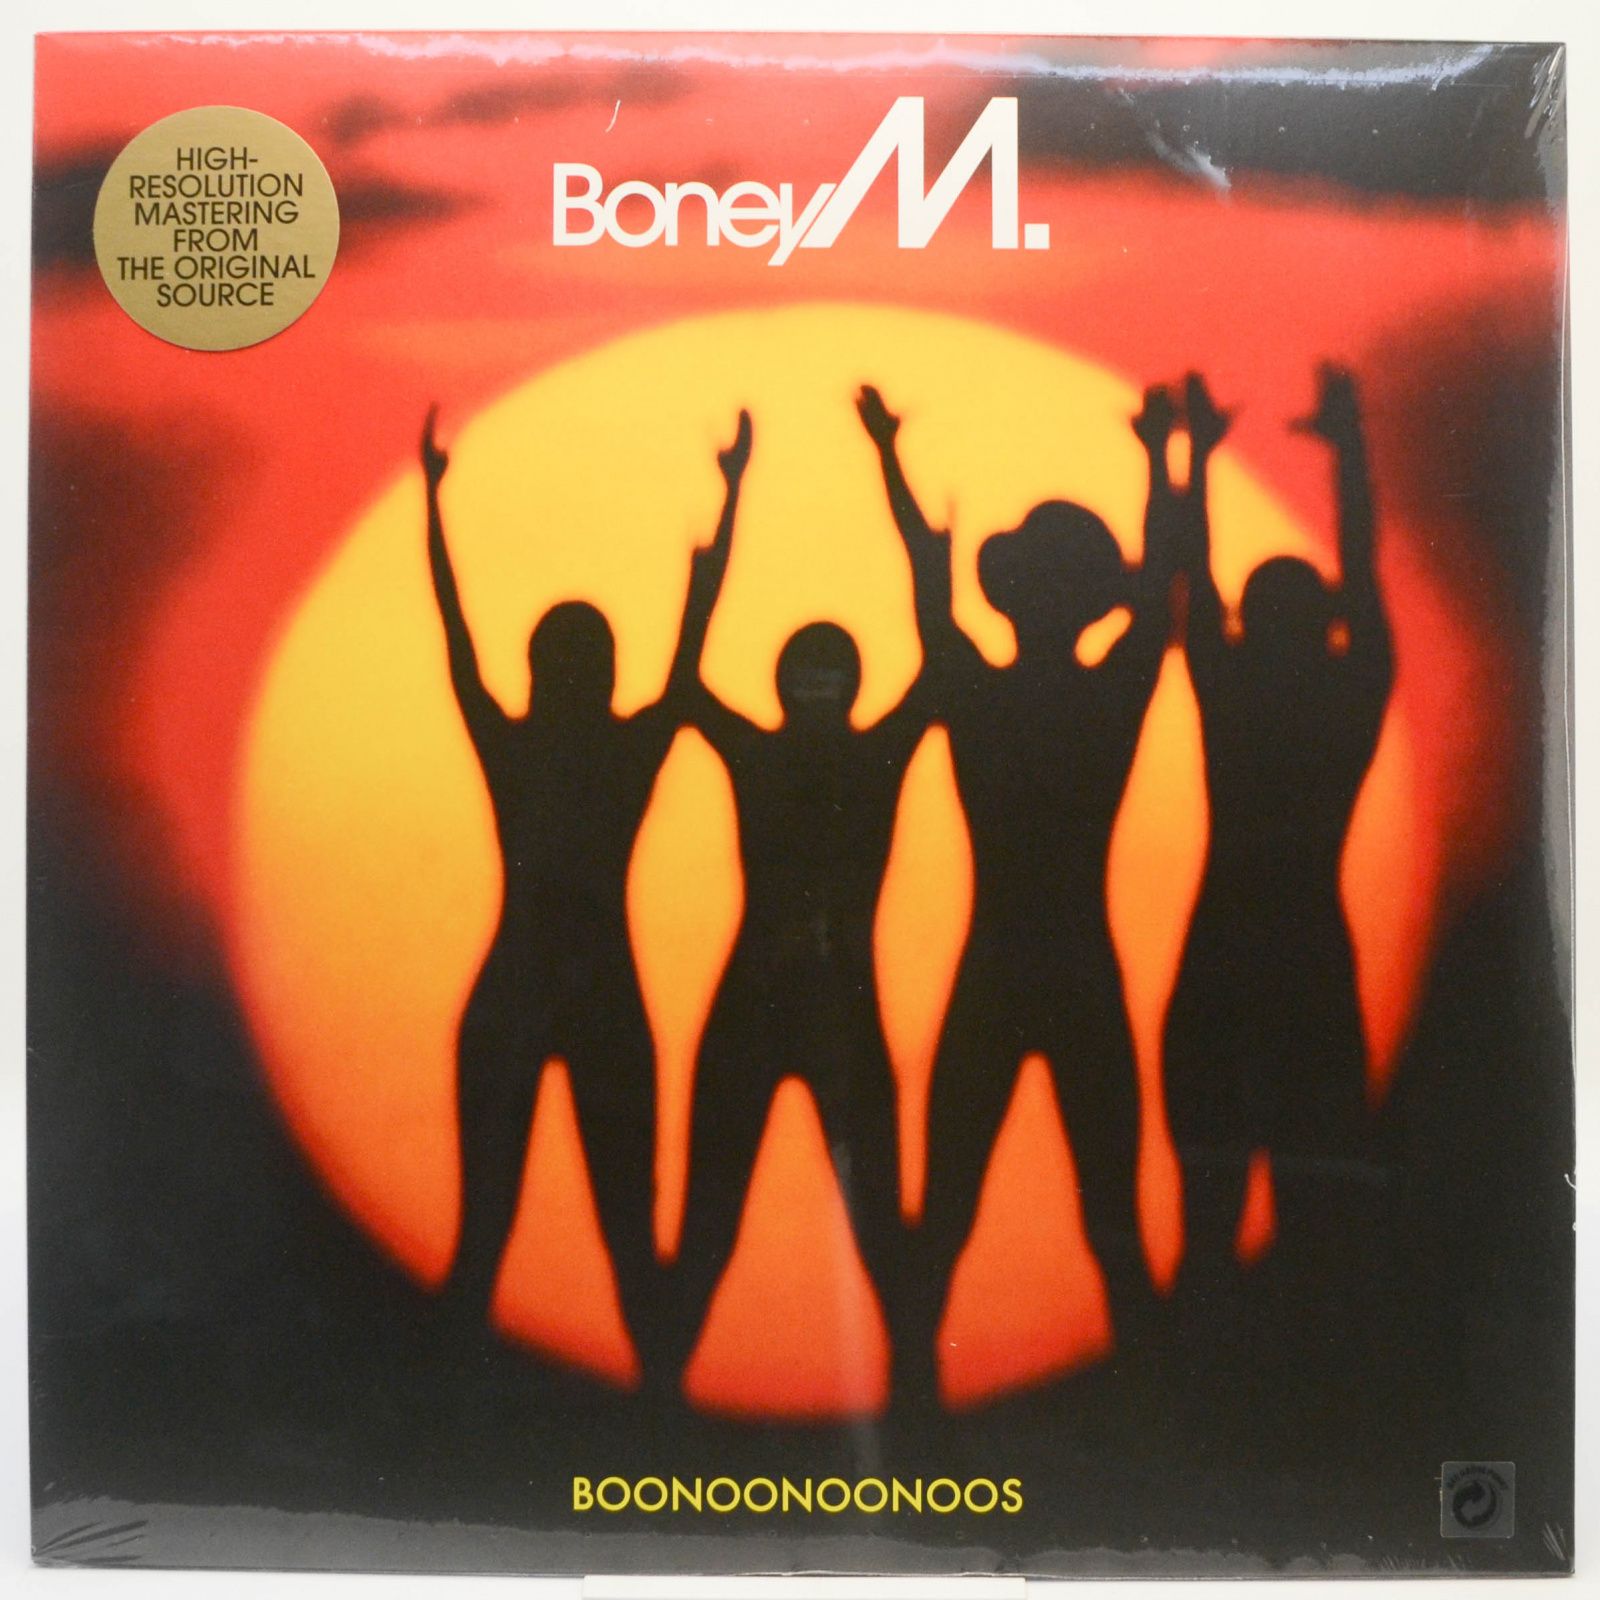 Boney M. — Boonoonoonoos, 2017